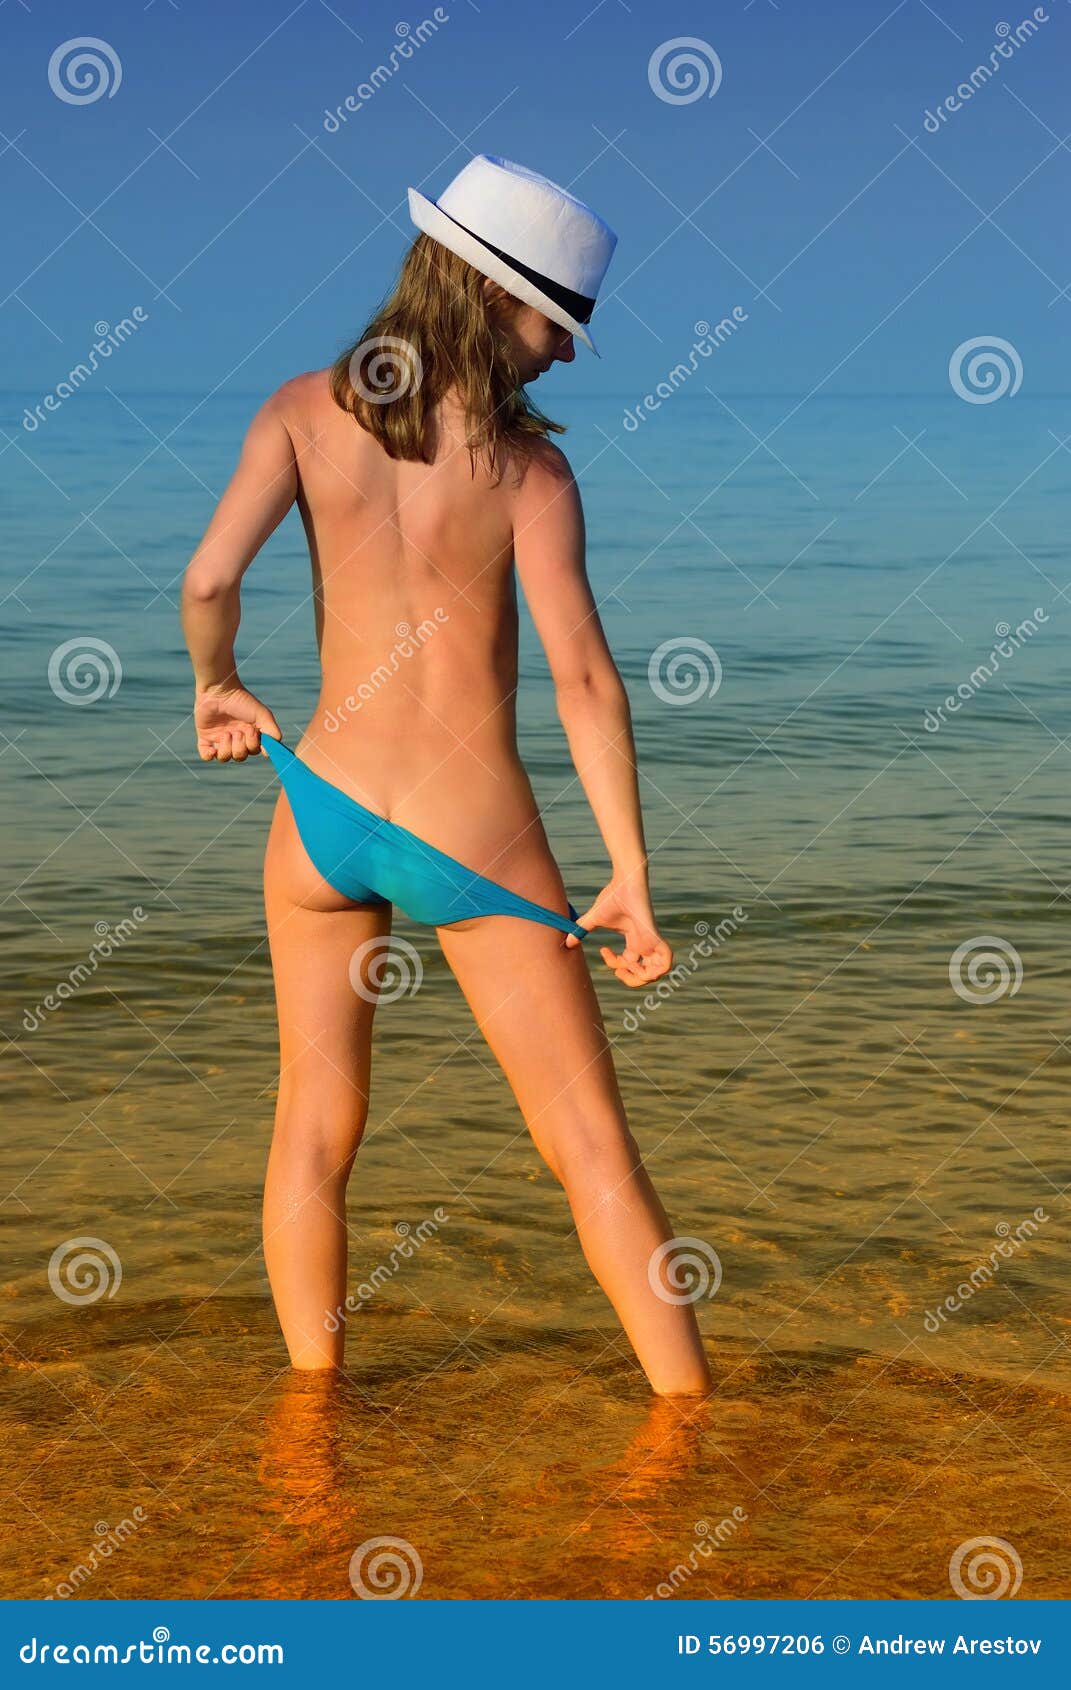 daniel coppel share russian nude beach girls photos